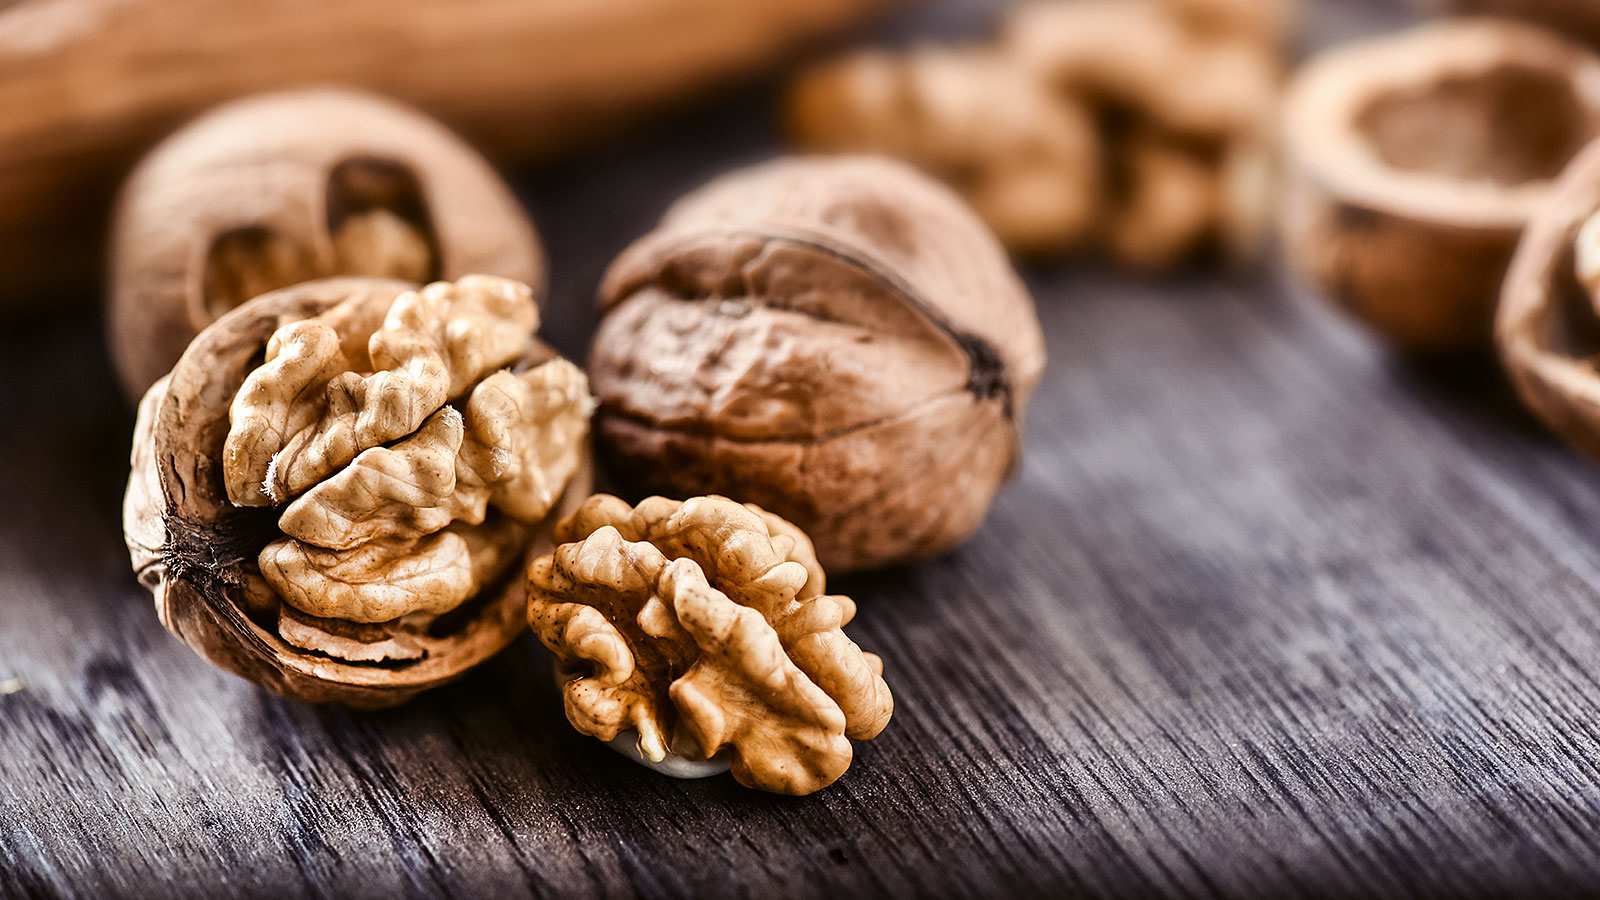 health benefits of eating walnuts